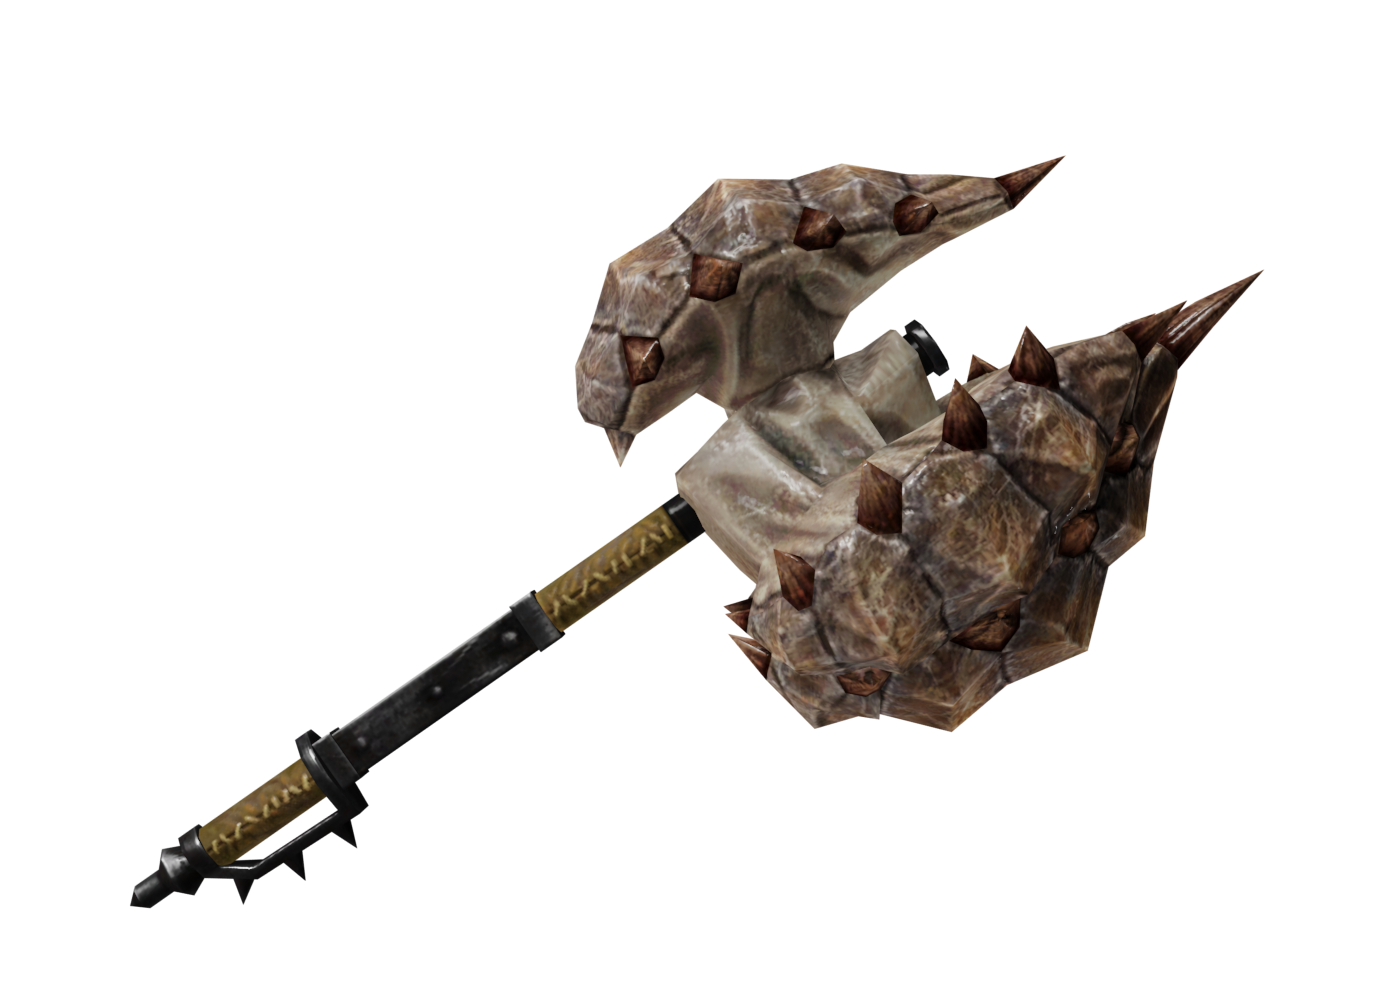 Stuffed Diablos Hunter layered weapon (Hammer)